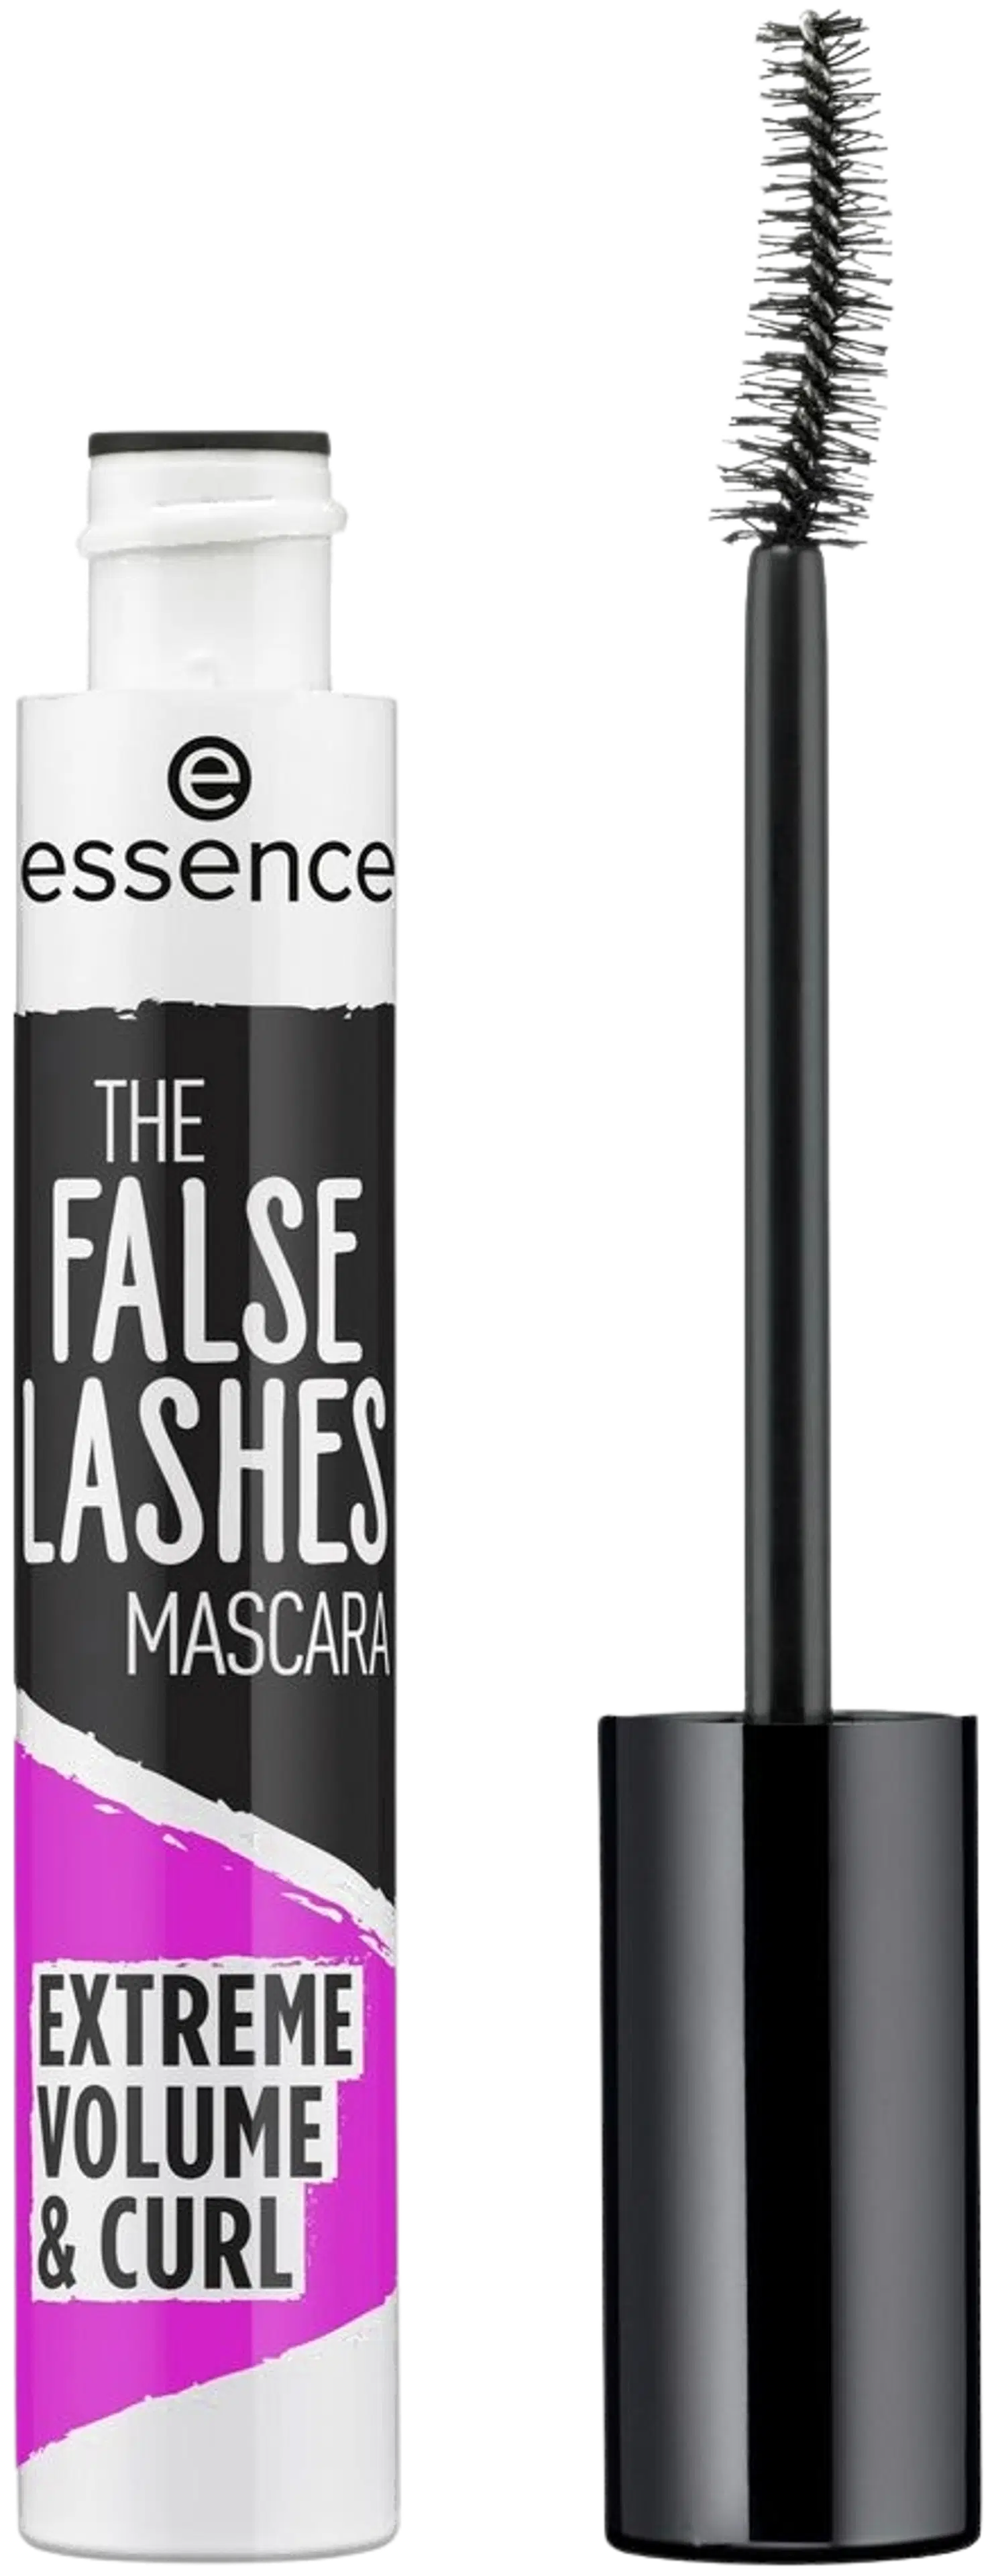 essence THE FALSE LASHES MASCARA EXTREME VOLUME & CURL 10 ml